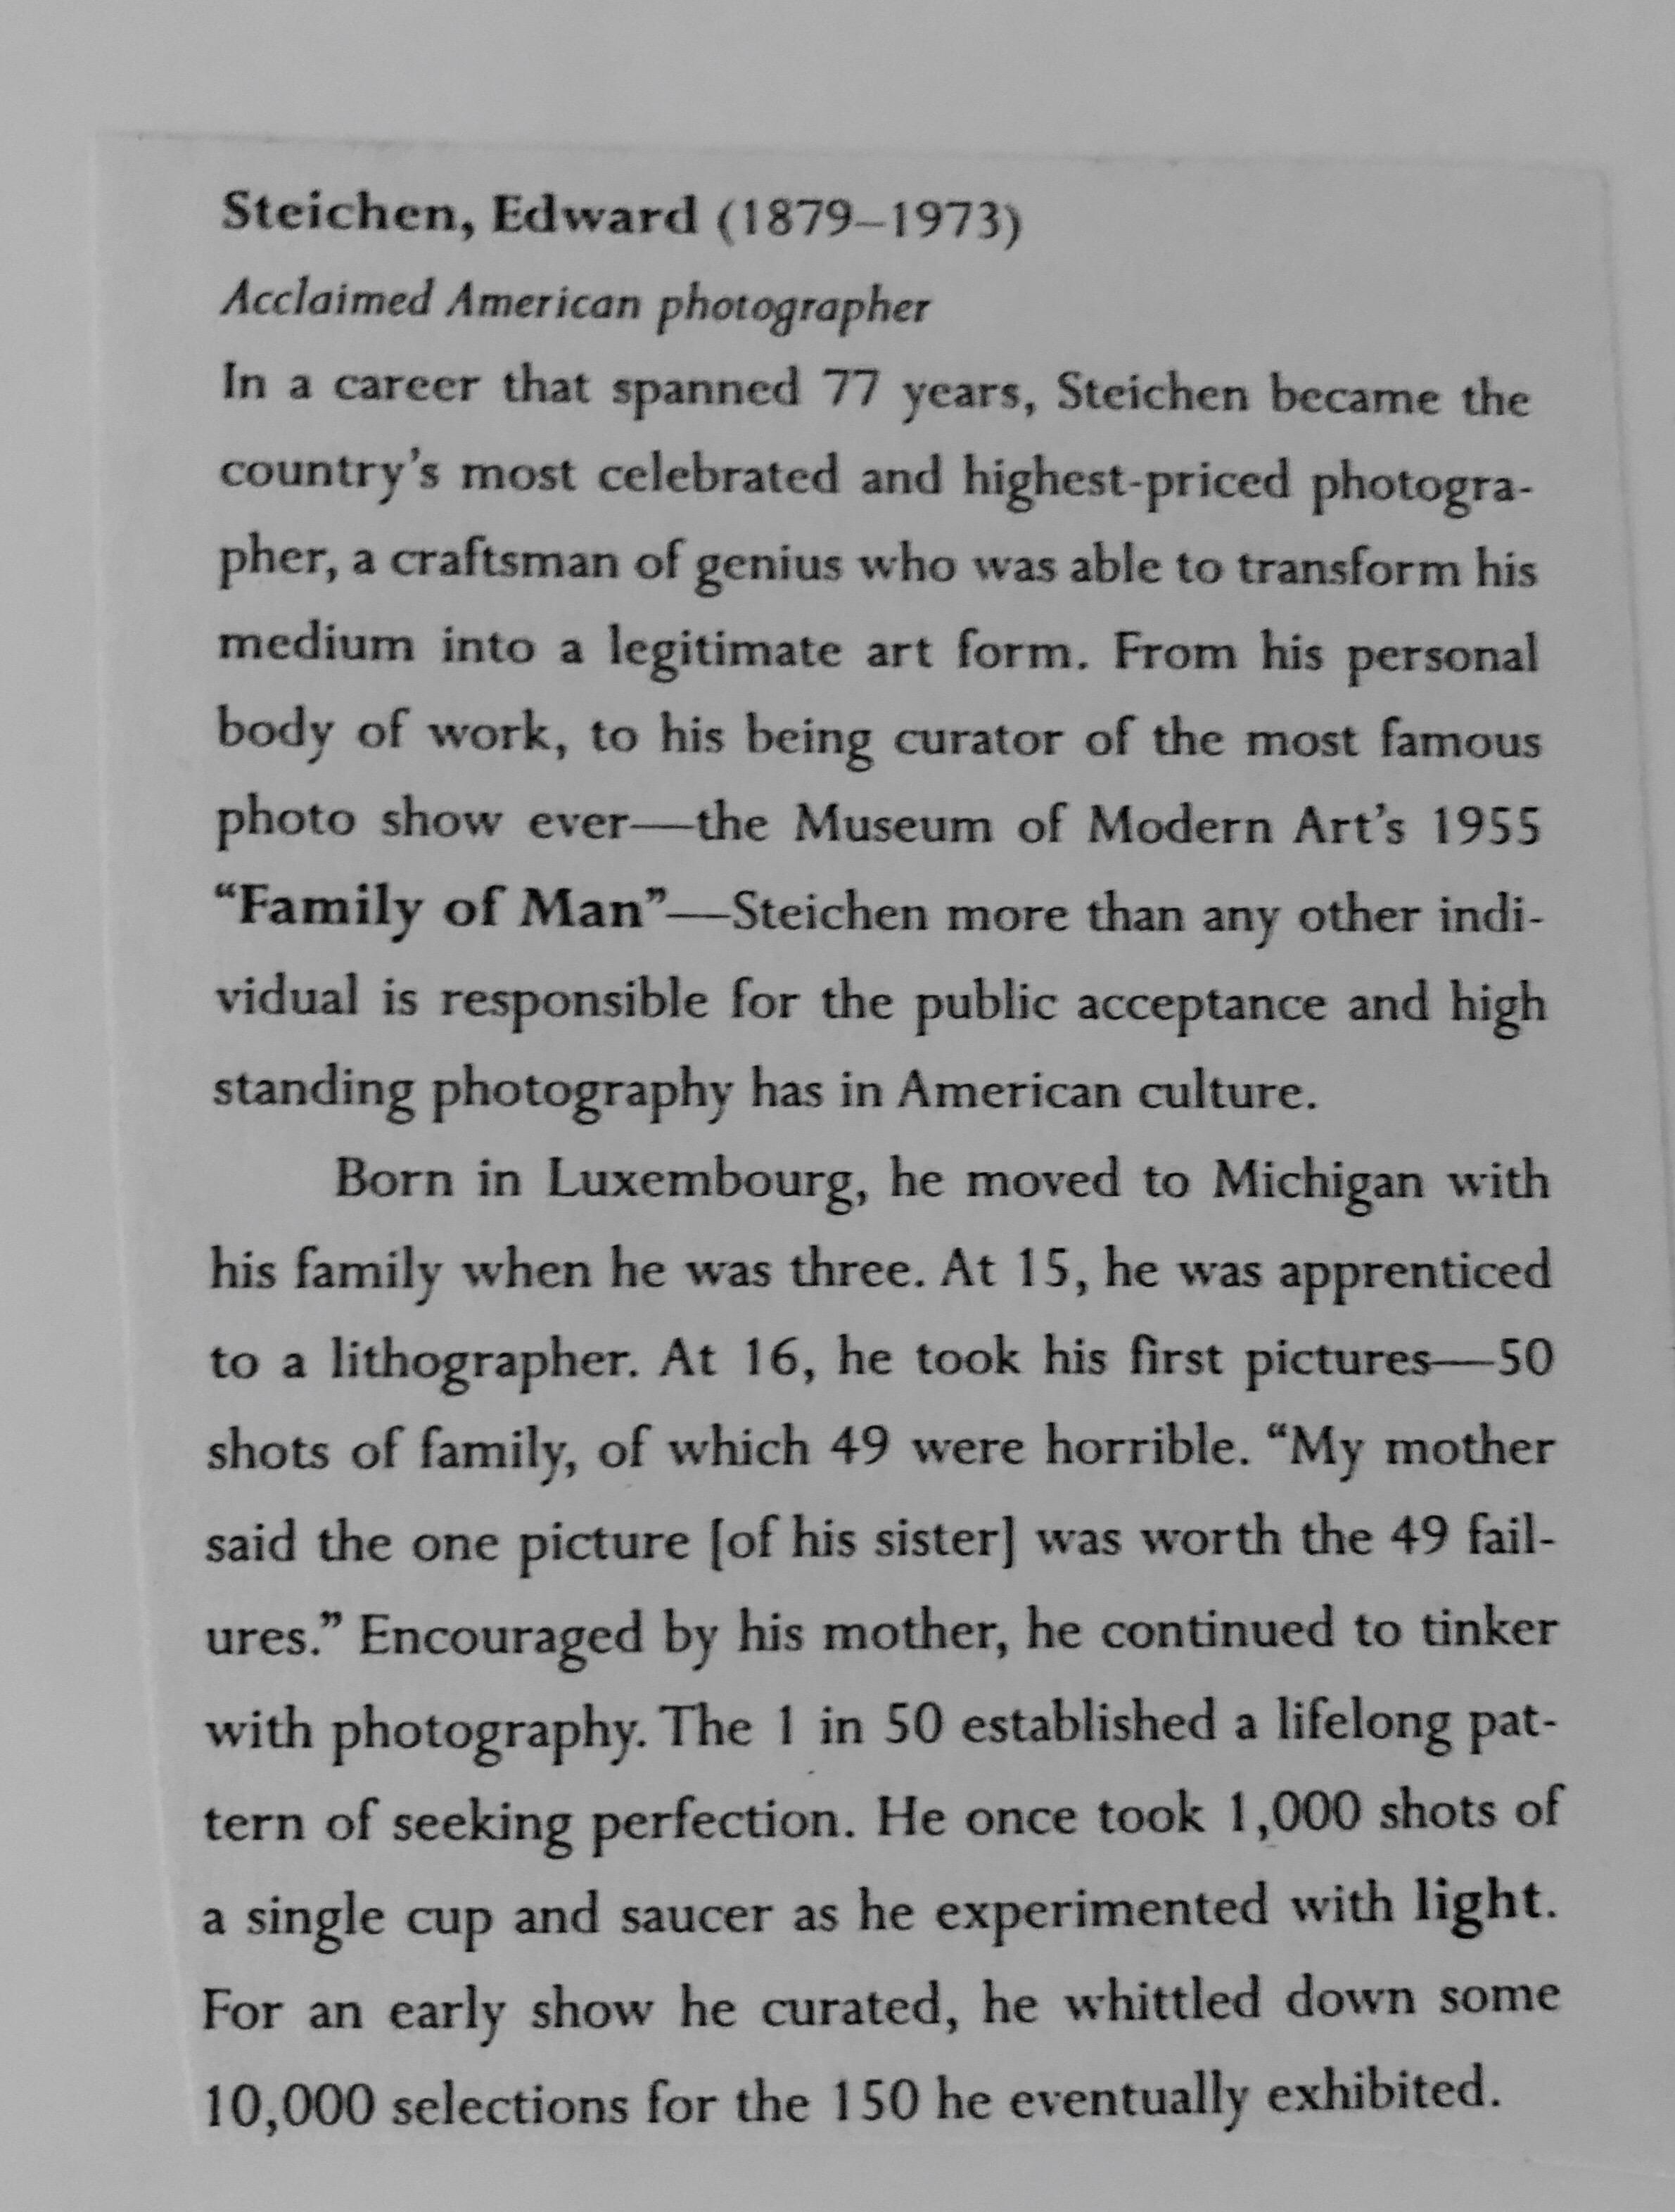 Edward Steichen, John Durniak, Monroe Wheeler and Edward D. Museum of modern art on Feb 10, 1962
Photographer Fred McDarrah 

Over a 50-year span, McDarrah documented the rise of the Beat Generation, the city’s postmodern art movement, its